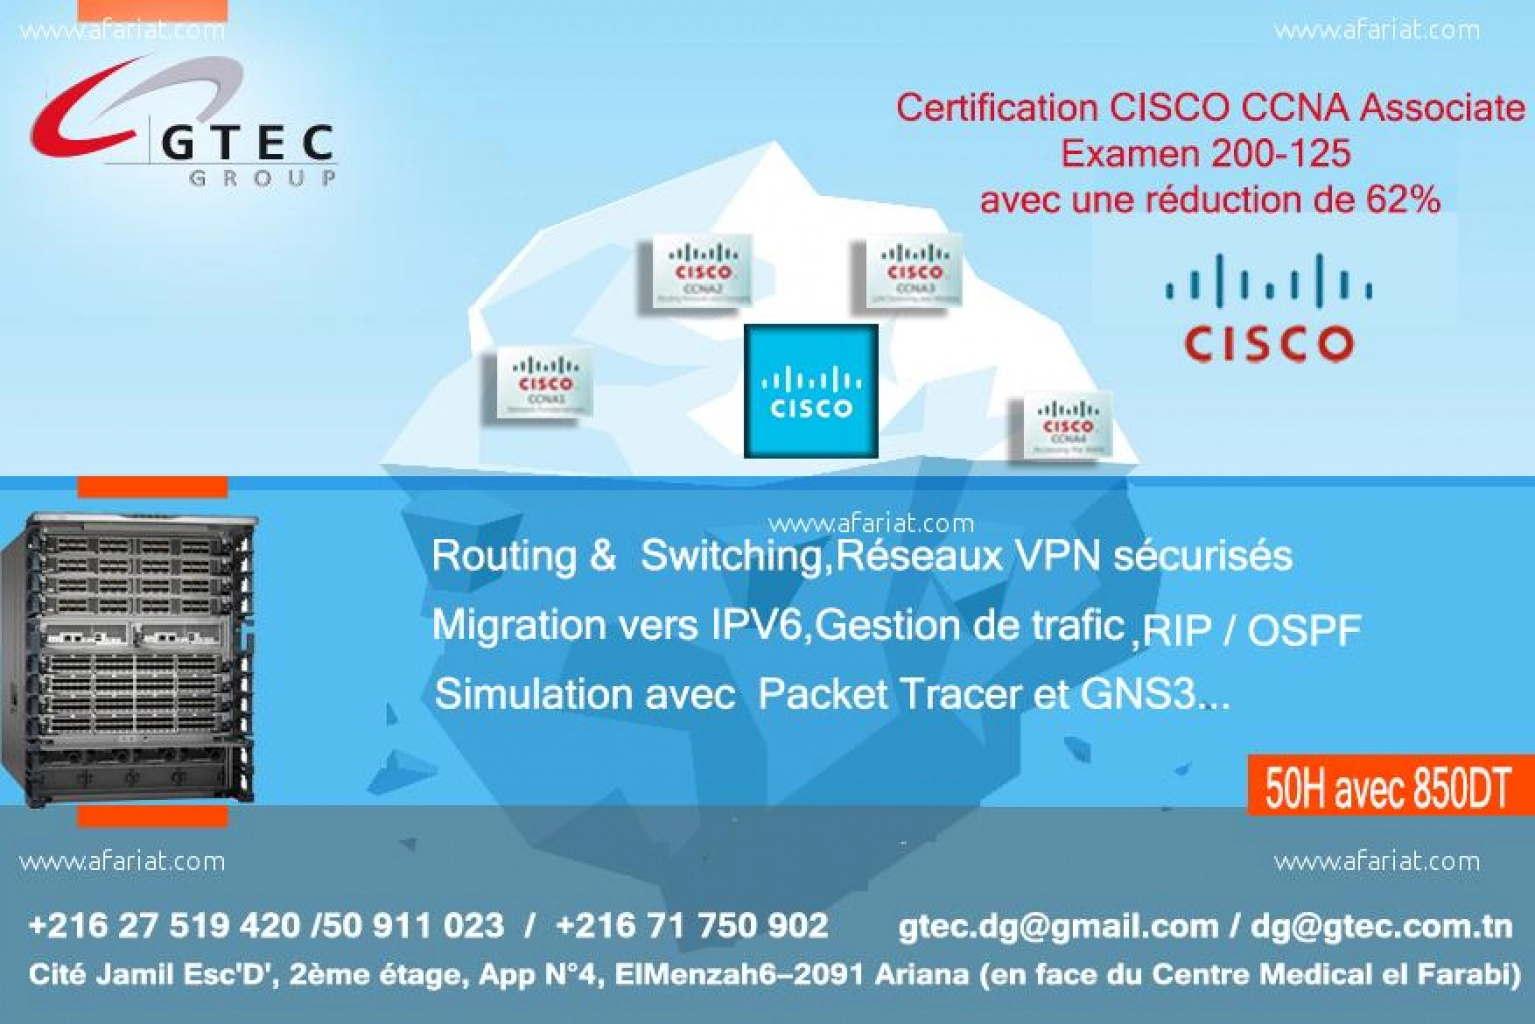 Certification Internationale CISCO CCNA